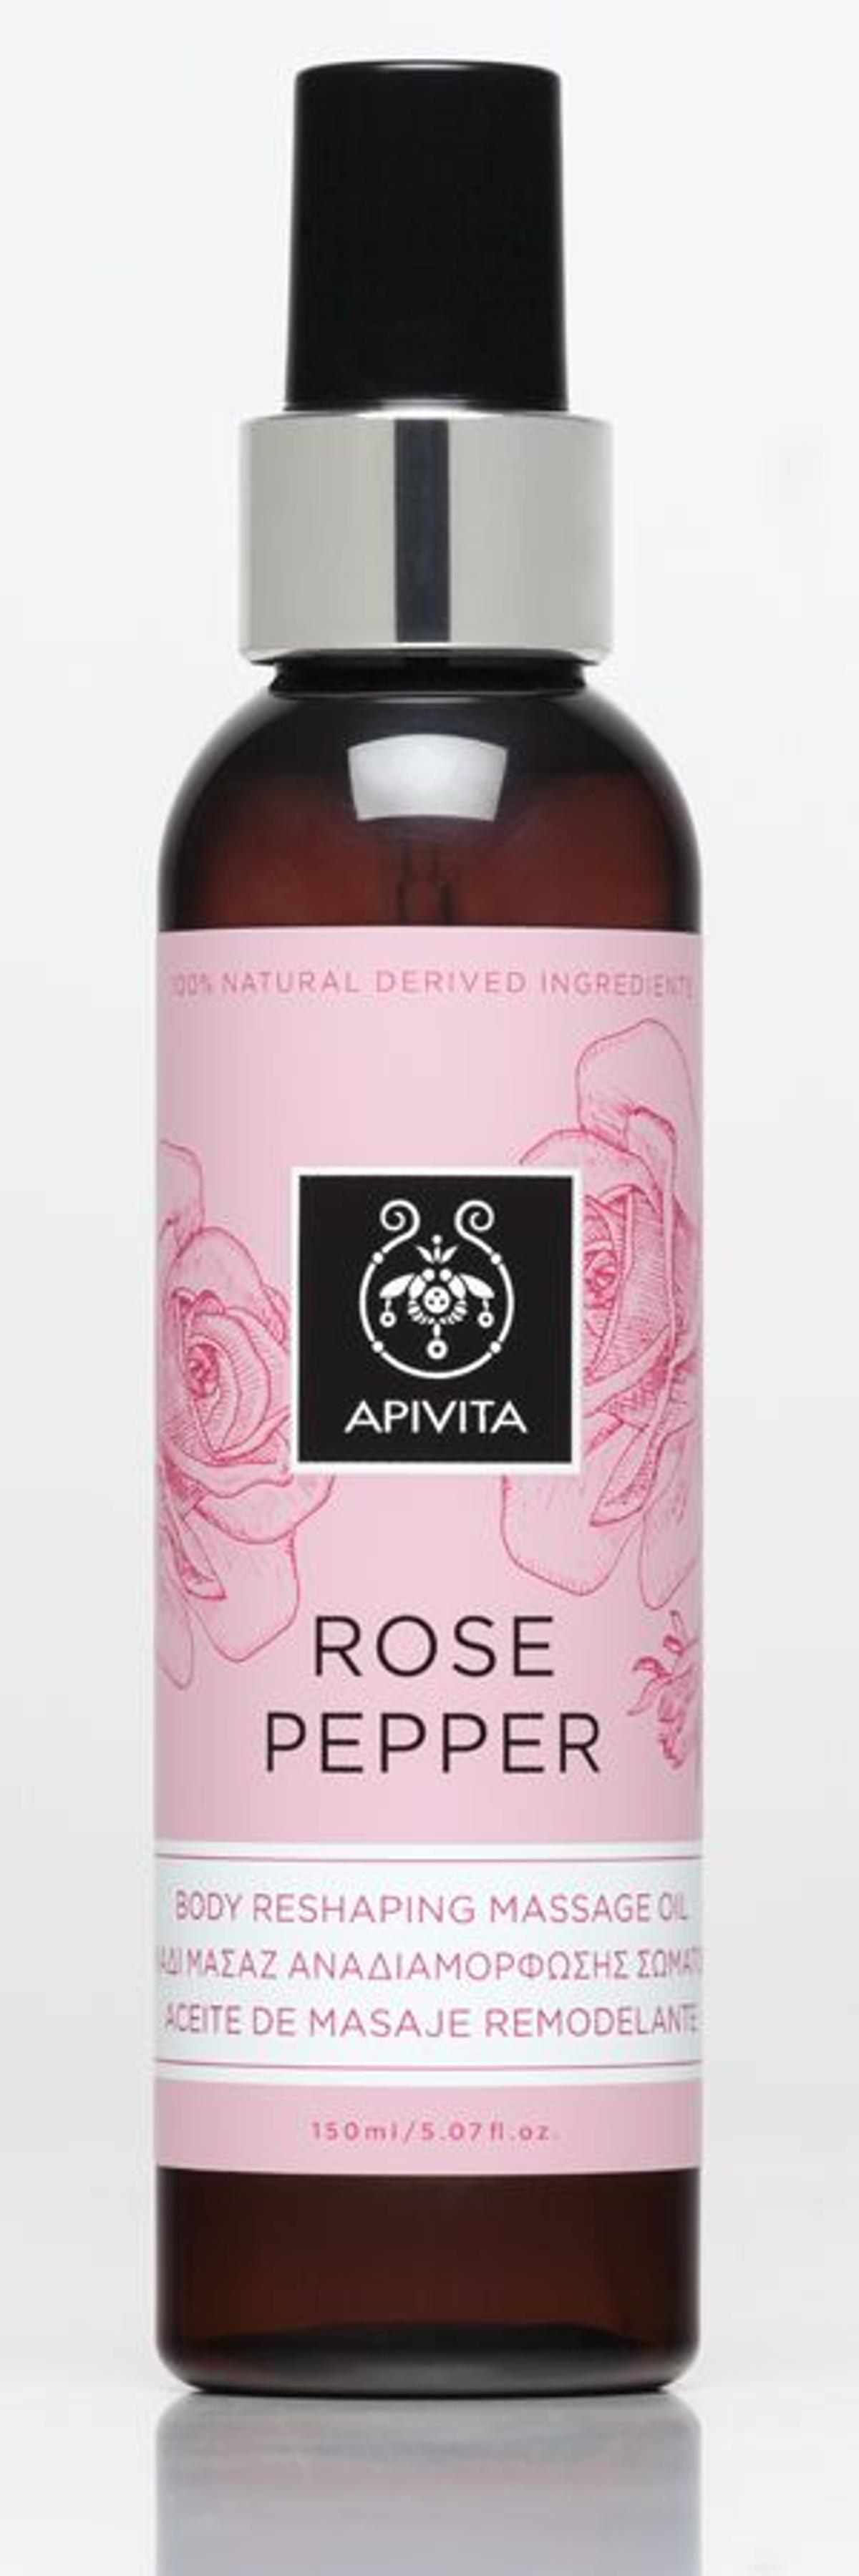 Aceite de masaje corporal remodelante Rose Pepper, de Apivita